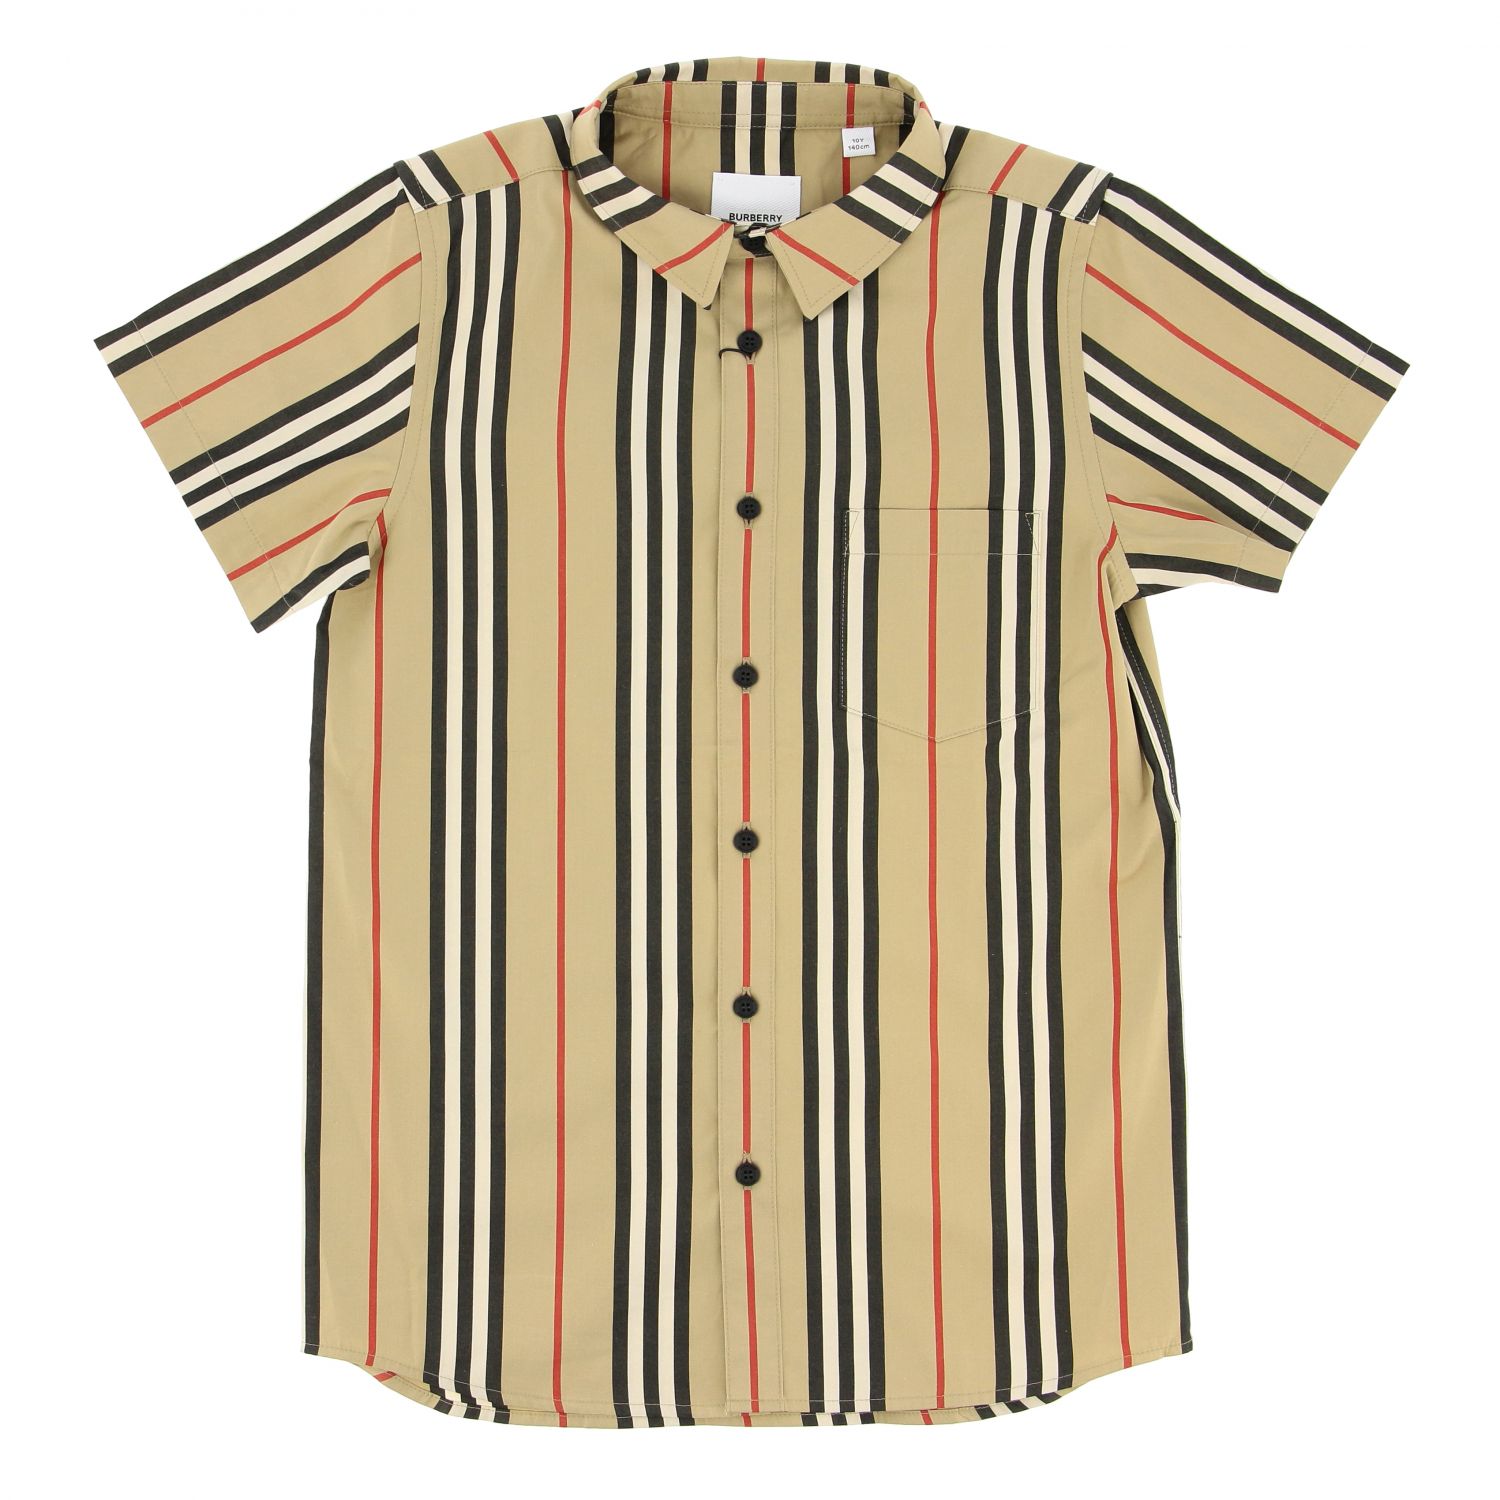 burberry striped shirt